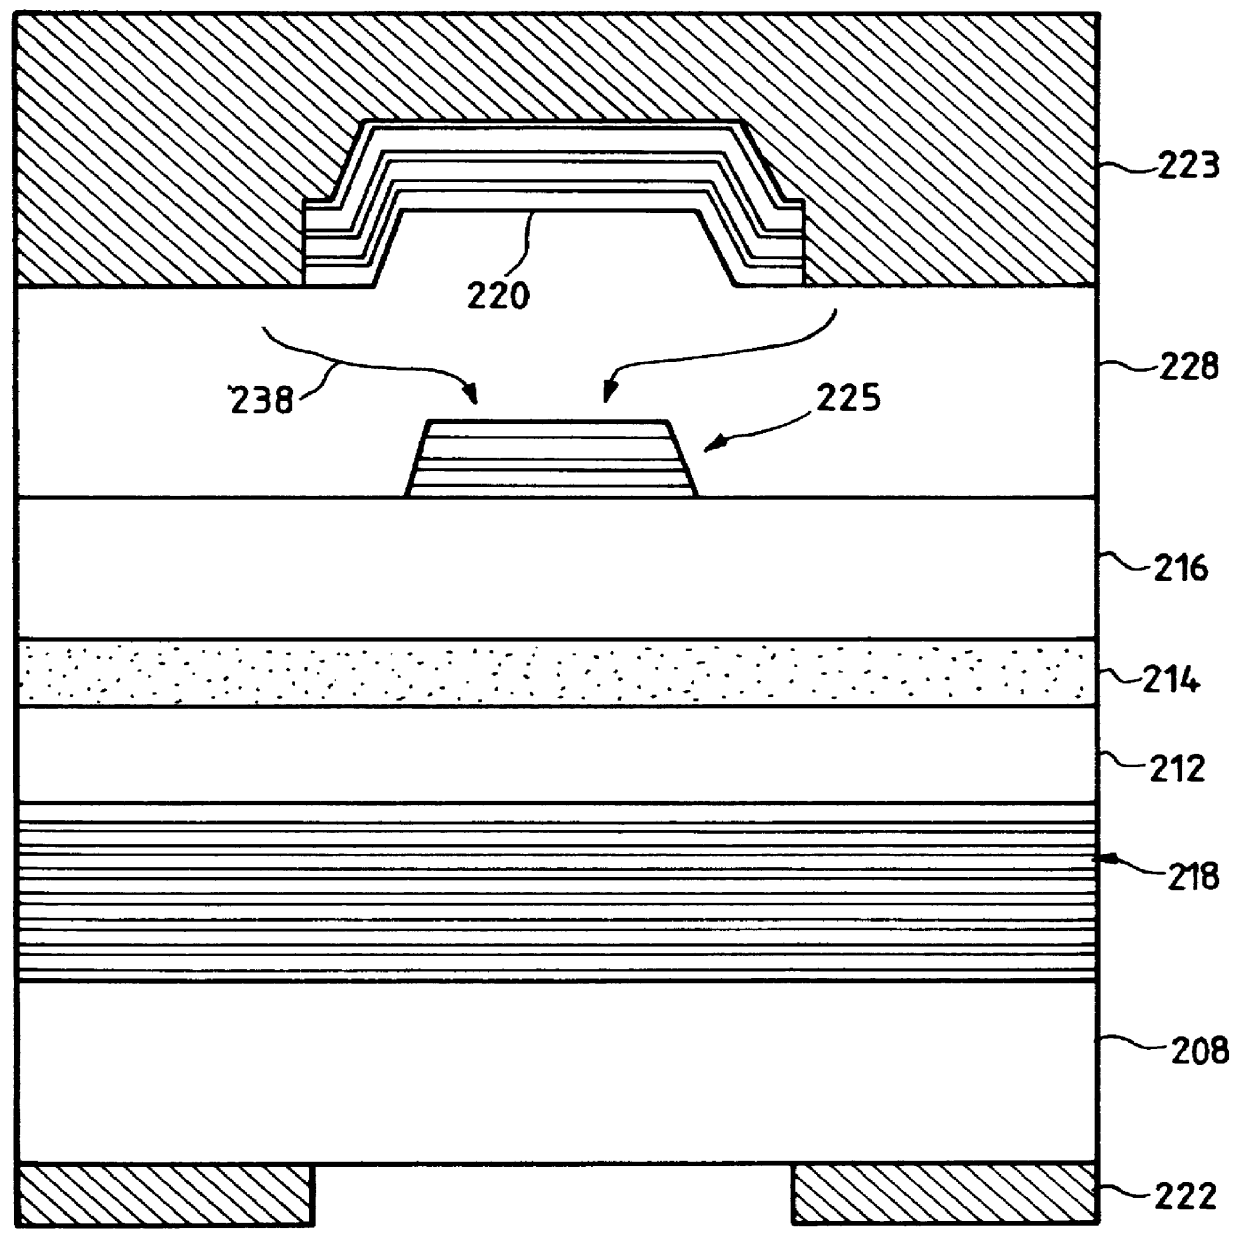 Surface emitting semiconductor laser